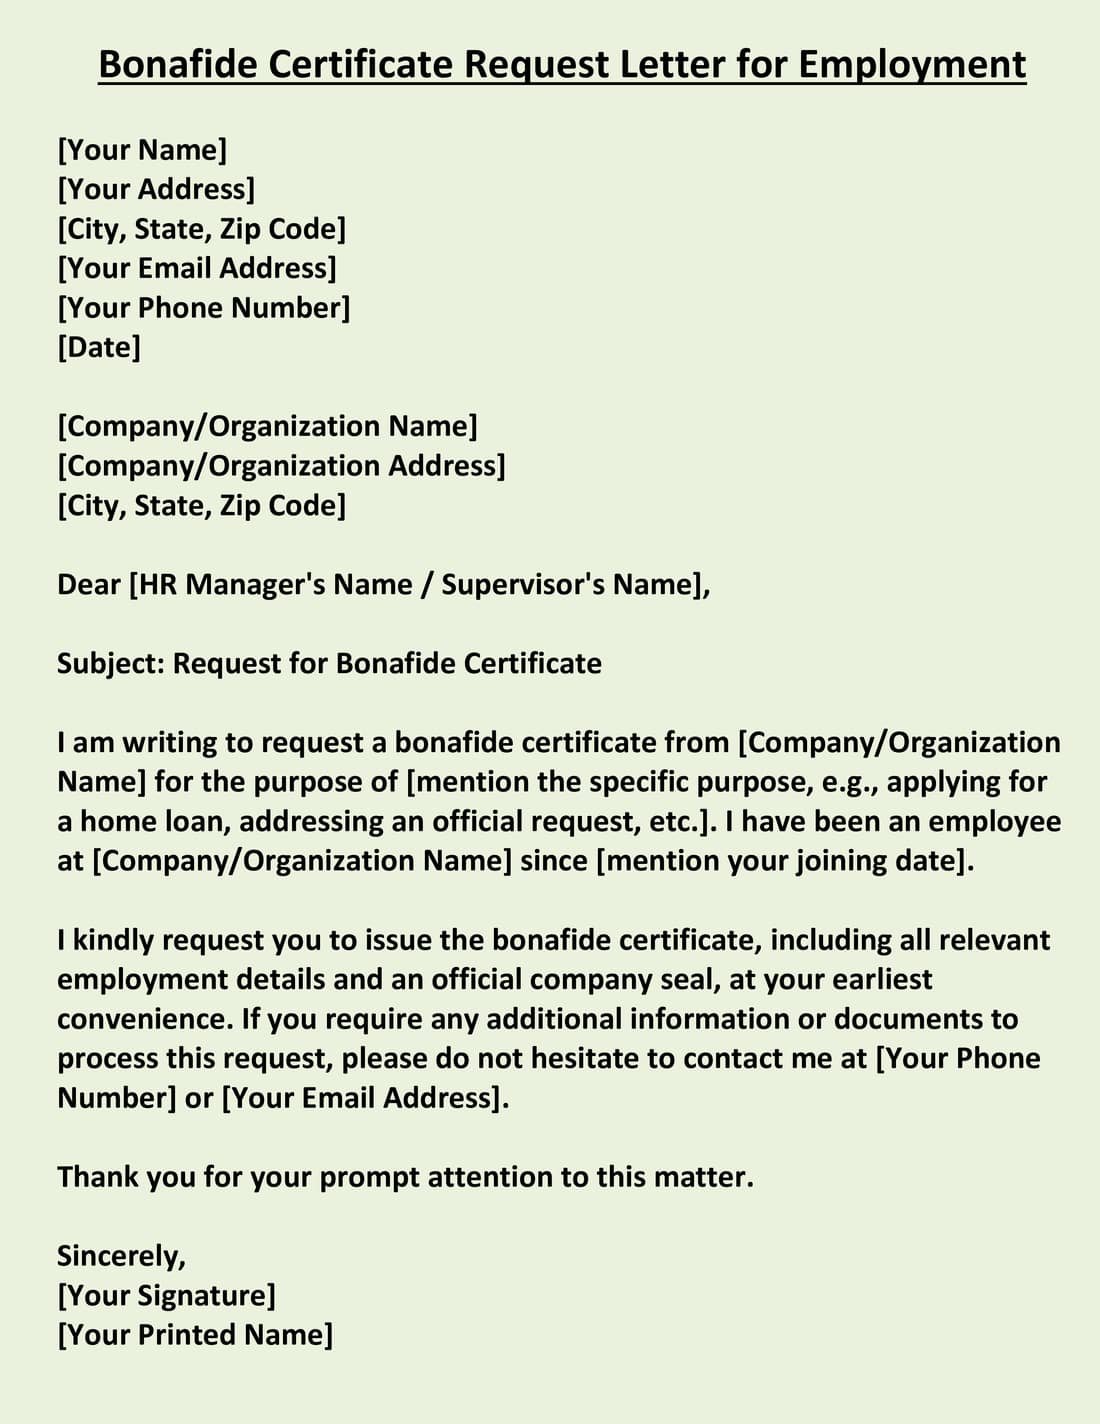 Bonafide Certificate Request Letter for Employment